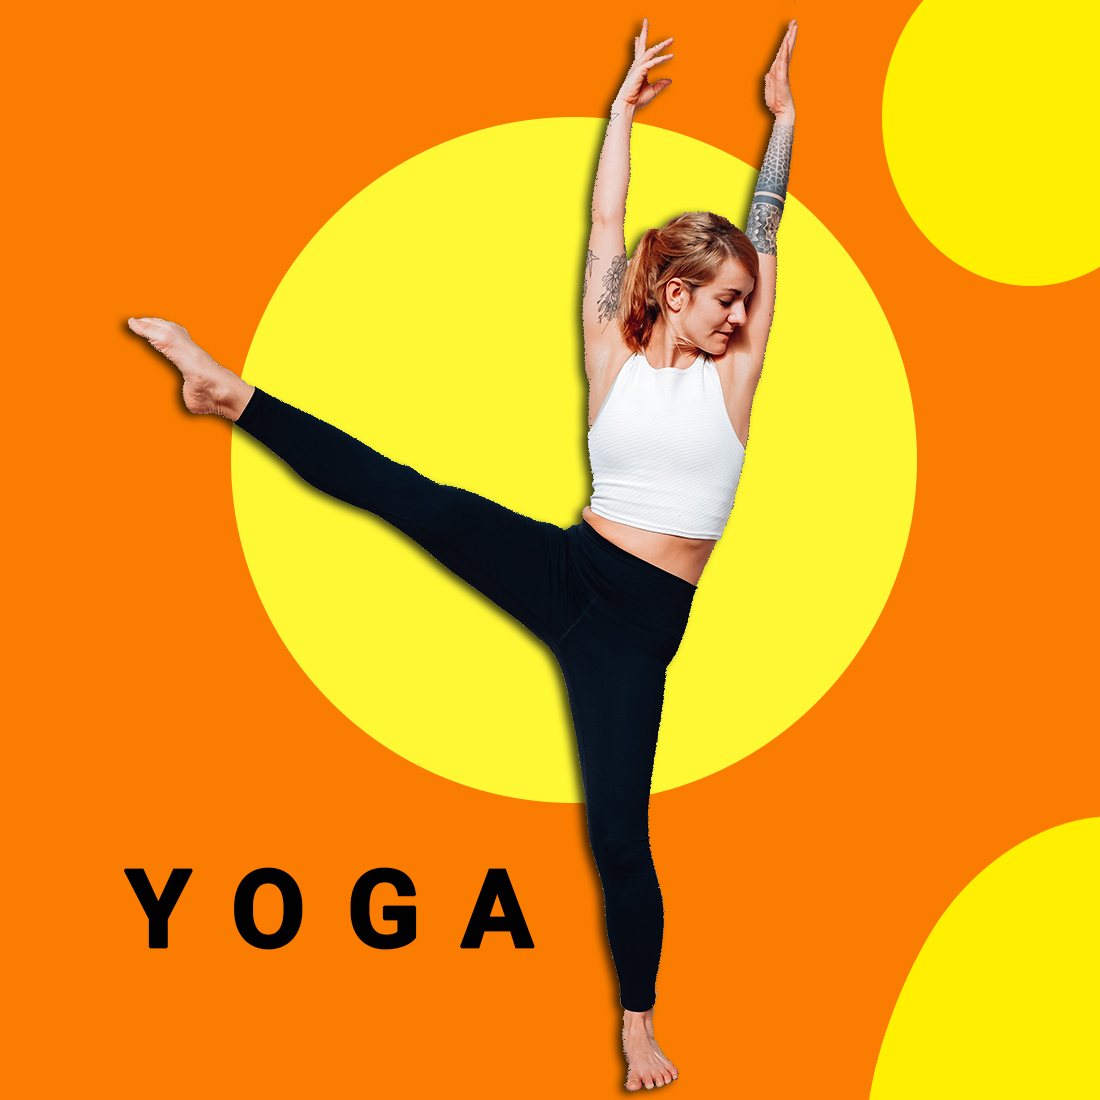 Yoga Poster Design - main image preview.